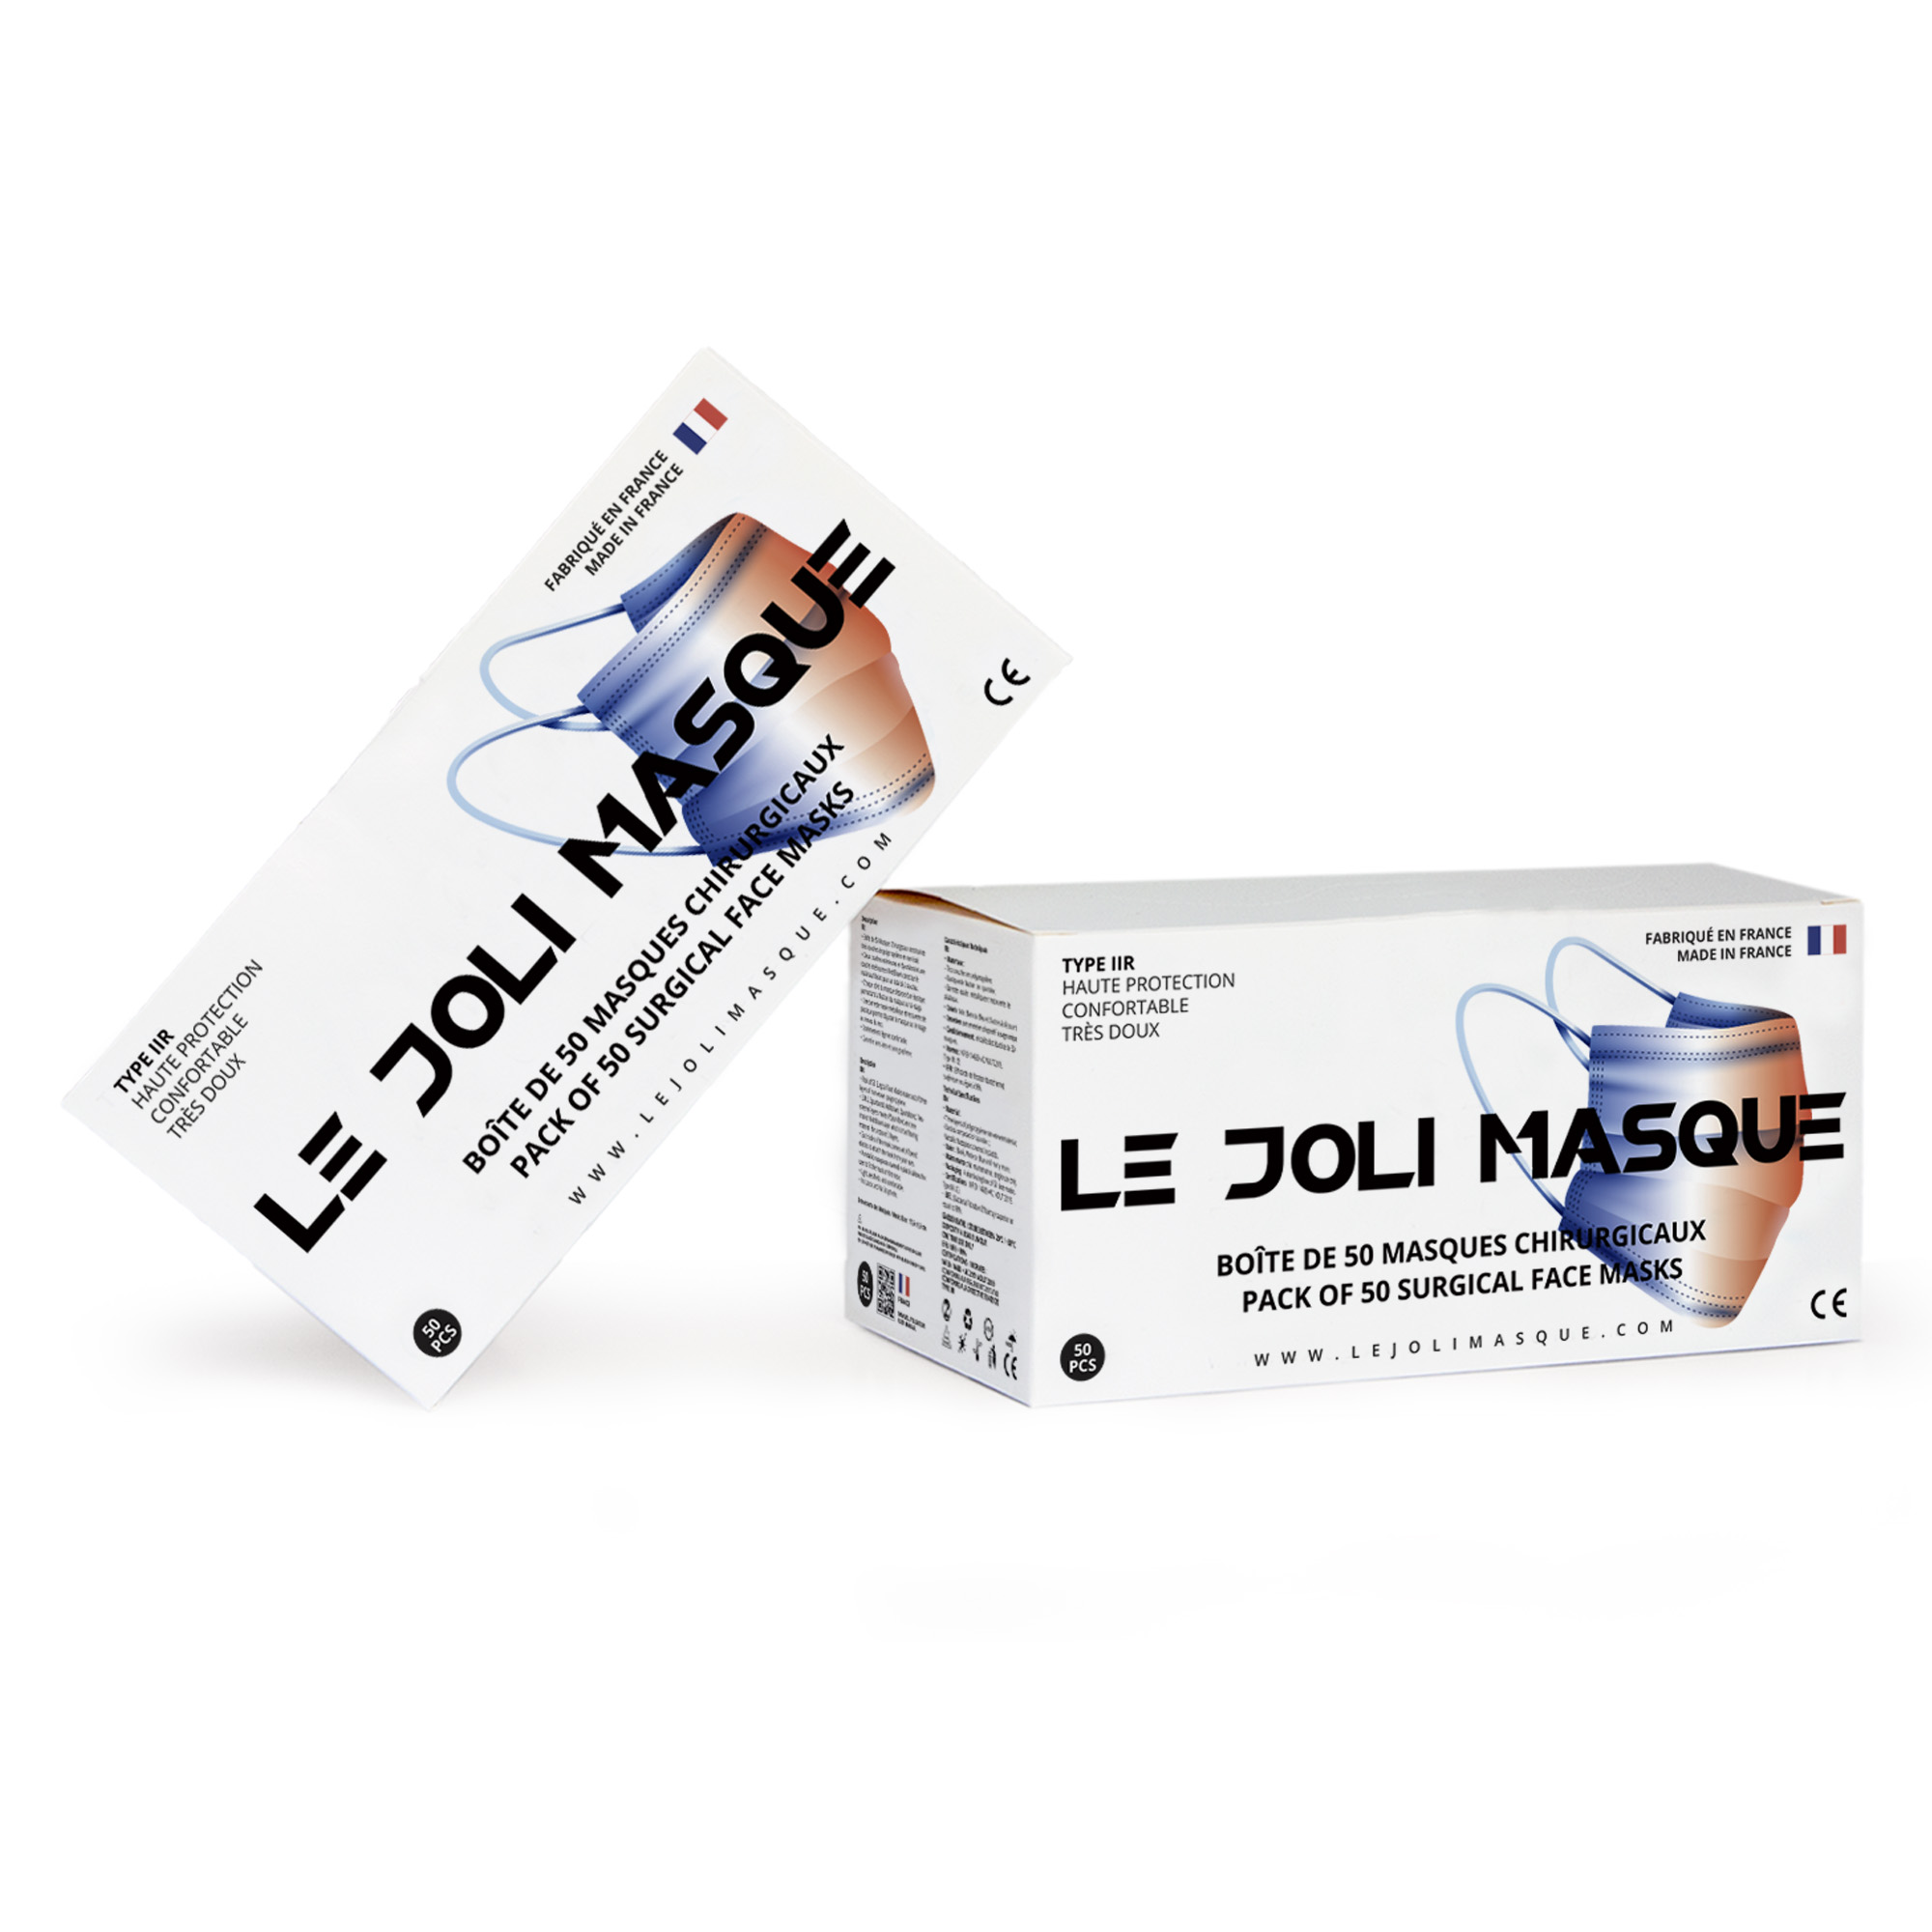 Masques chirurgicaux 3 plis IIR - Fabrication Française (SANS LATEX) -  BOITE 50 MASQUES